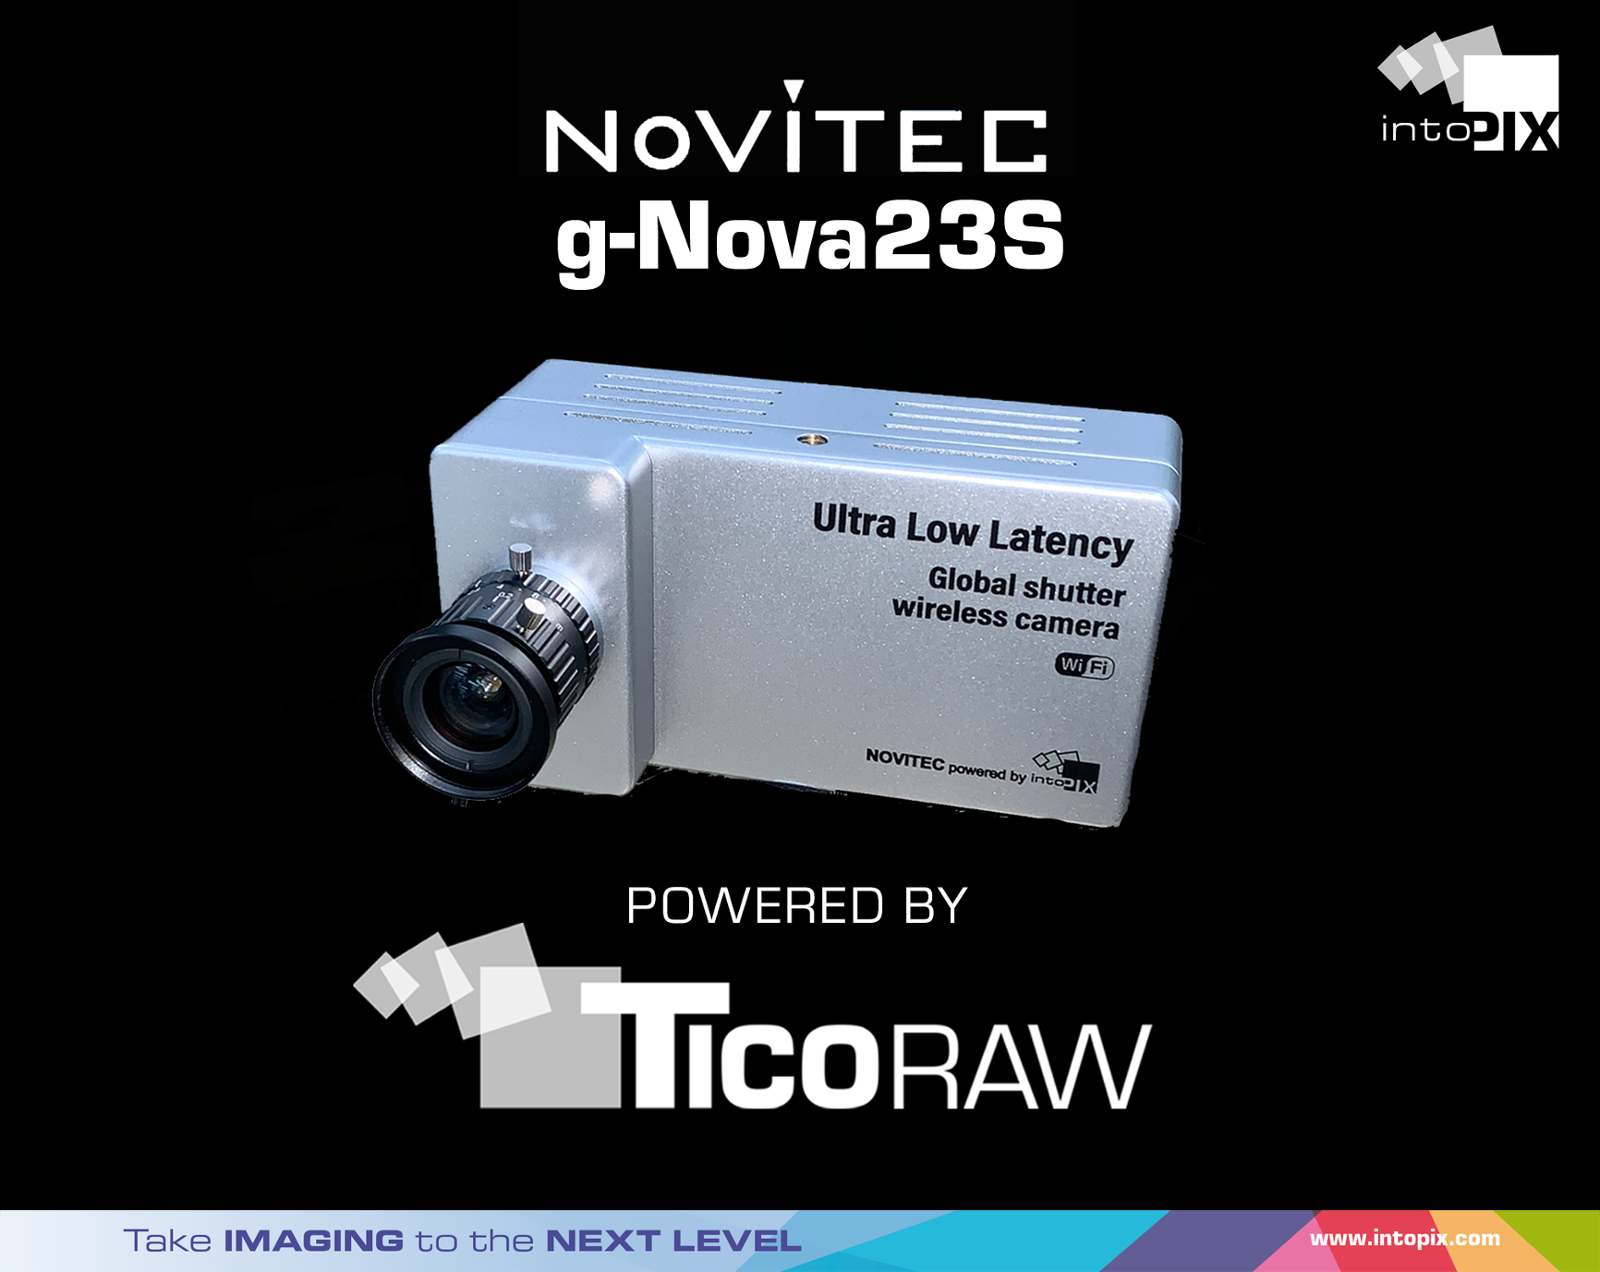 intoPIX announces TicoRAW integration into the new Novitec industrial camera portfolio